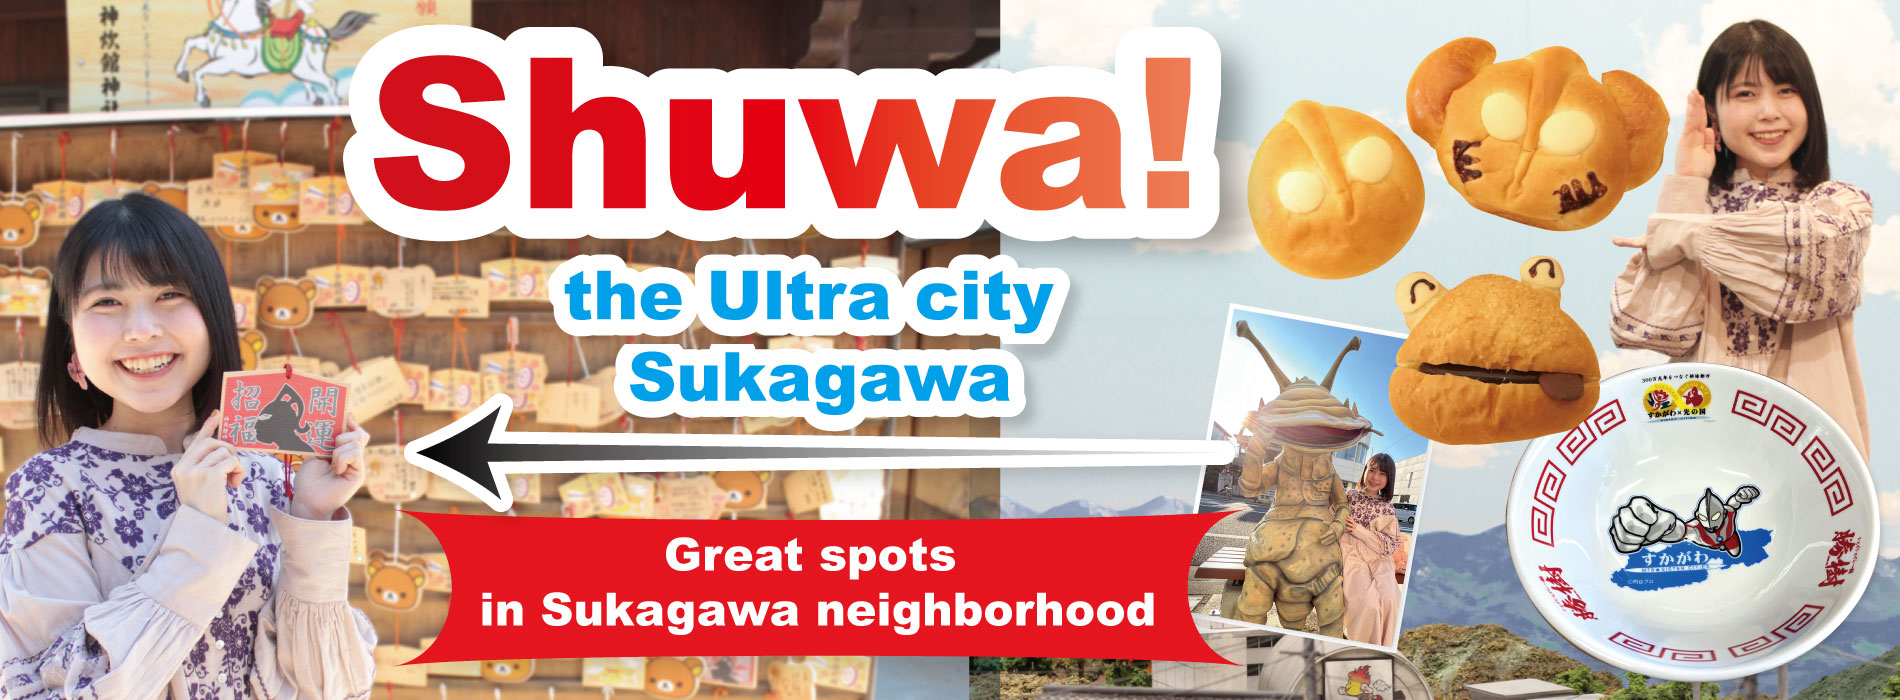 Shuwa! the Ultra city Sukagawa
【Great spots in Sukagawa neighborhood 】